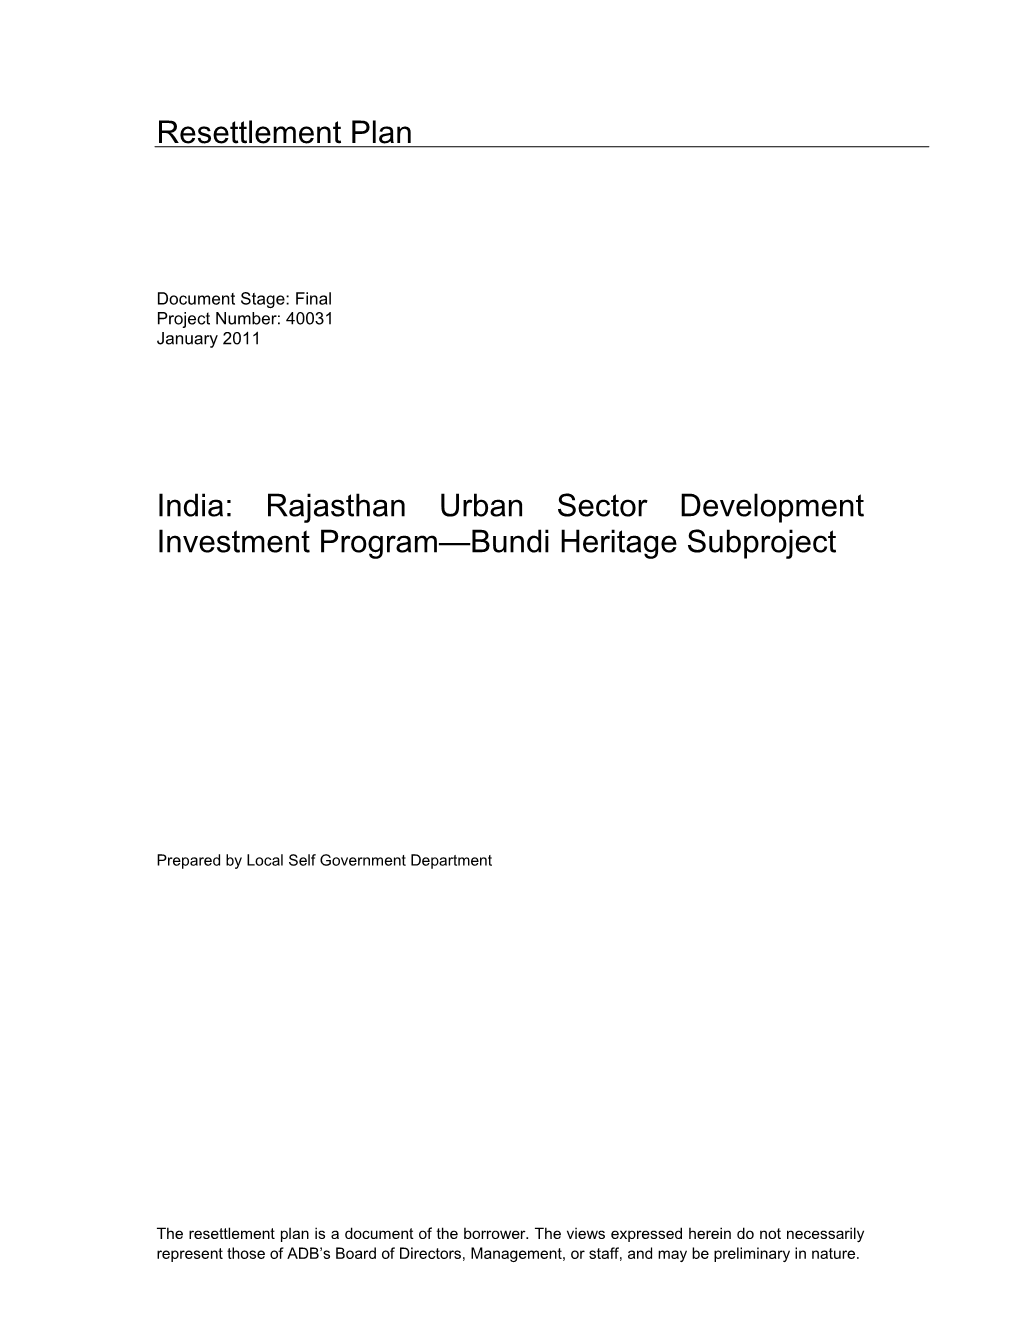 Bundi Heritage Subproject, Rajasthan Urban Sector Development Investment Program